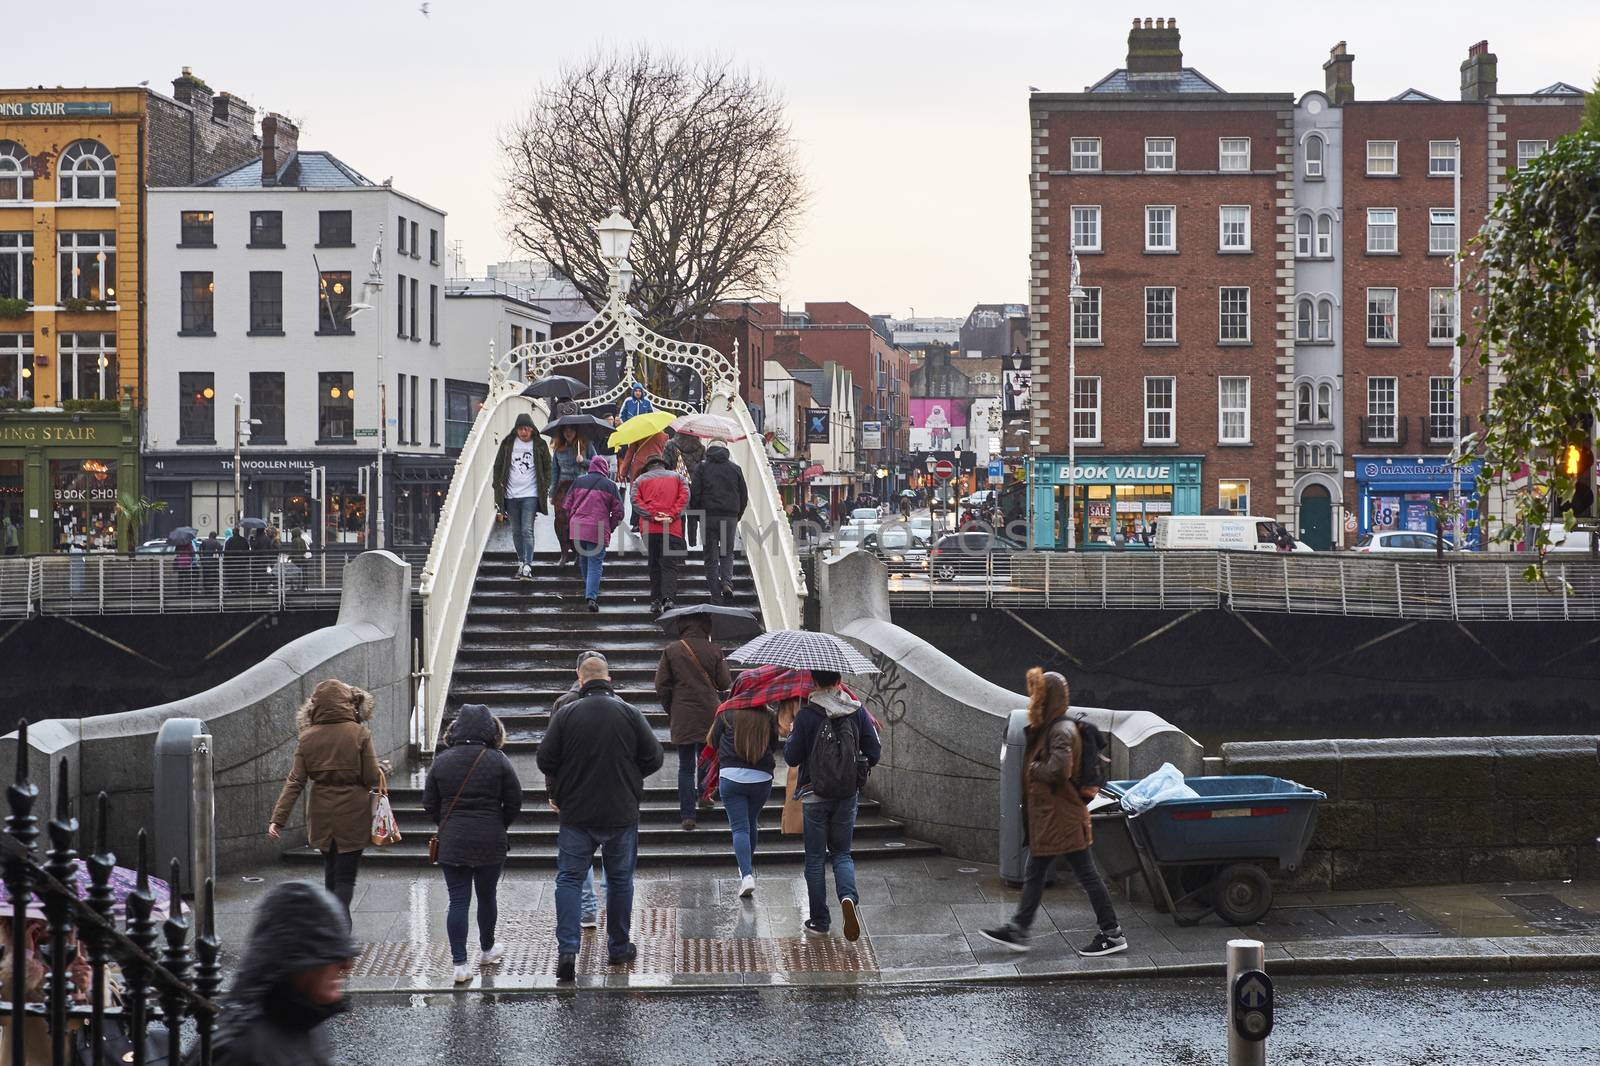 DUBLIN, IRELAND - JANUARY 05: Pedestrians walking over Ha'penny Bridge on a rainy day. The bridge is the main access point to the touristic area of Temple Bar. January 05, 2016 in Dublin